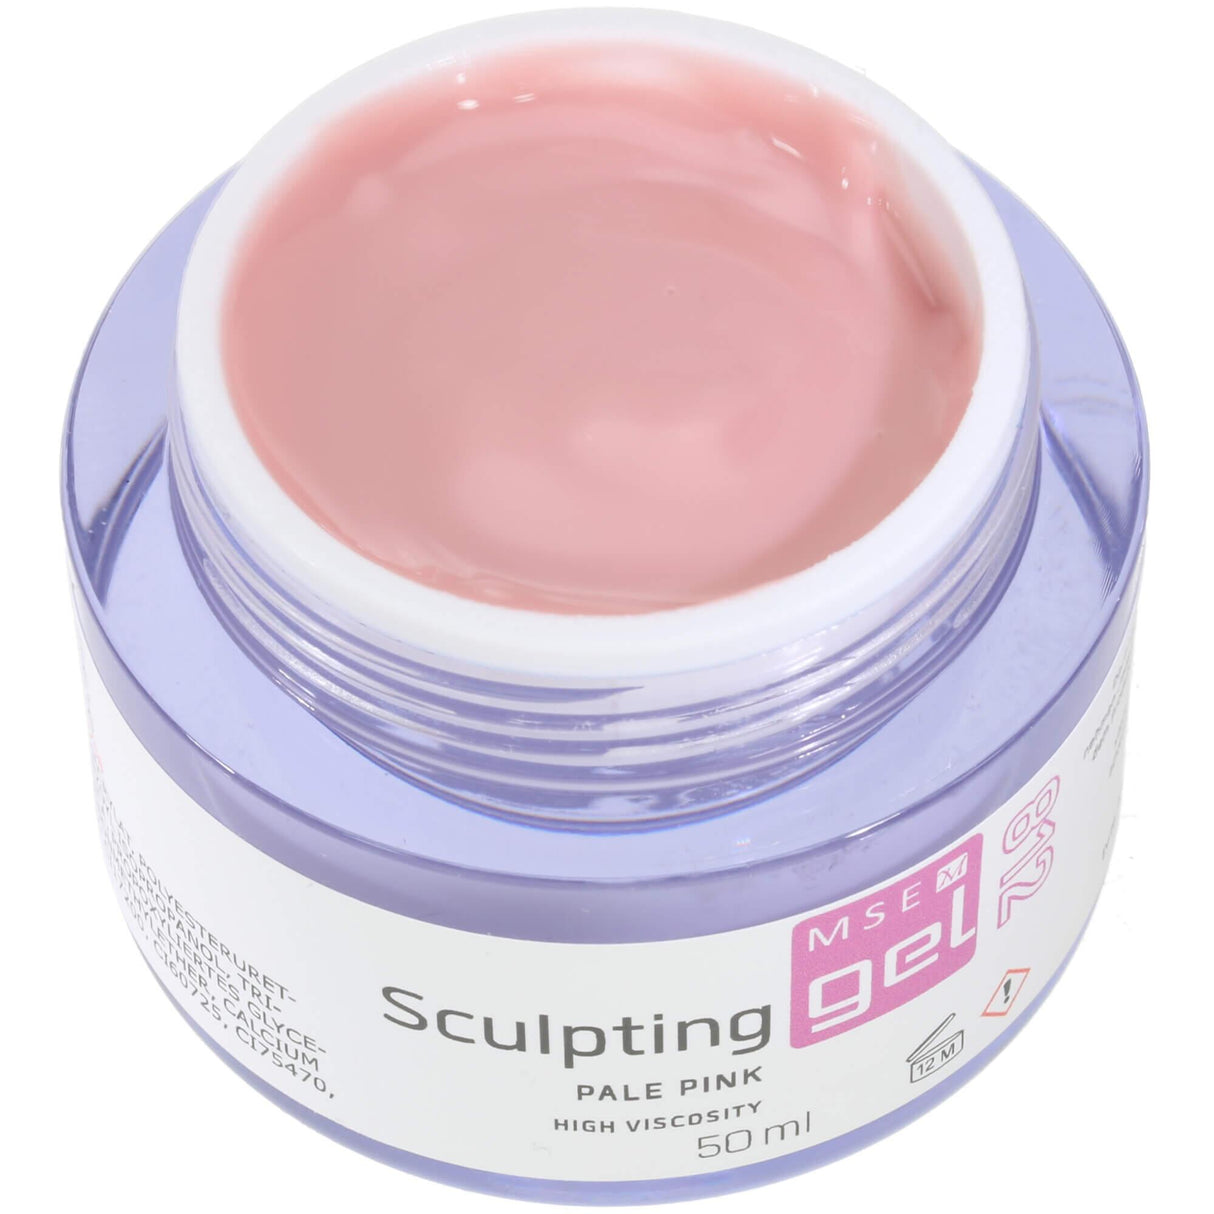 MSE Gel 812: Schablonen Gel blass pink, hochviskose / Sculpting pale pink high-viscosity 50ml - MSE - The Beauty Company